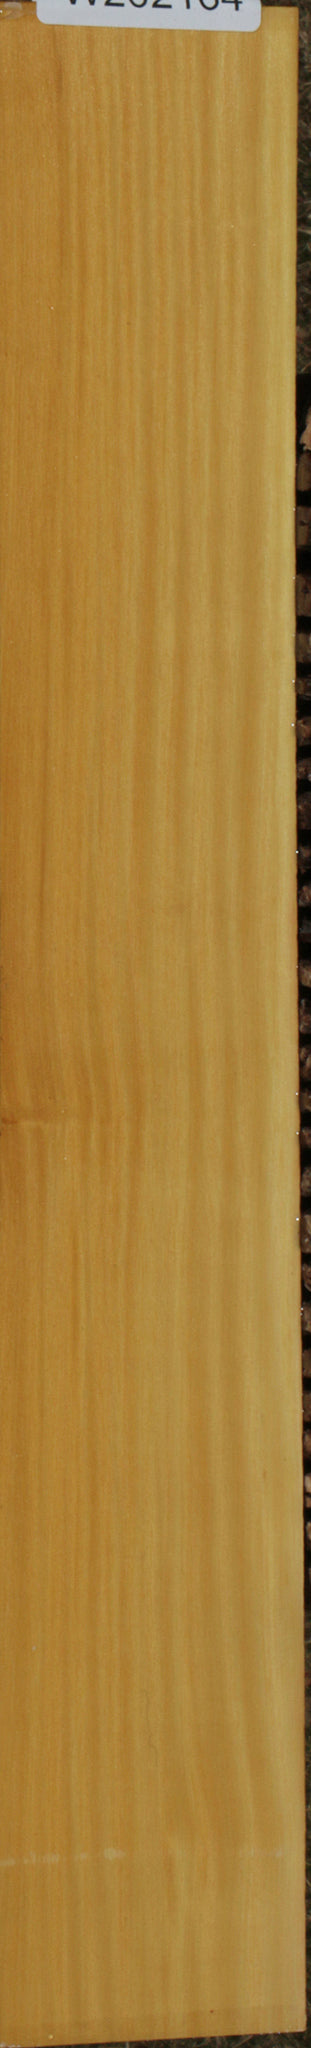 Kirandy Micro Lumber